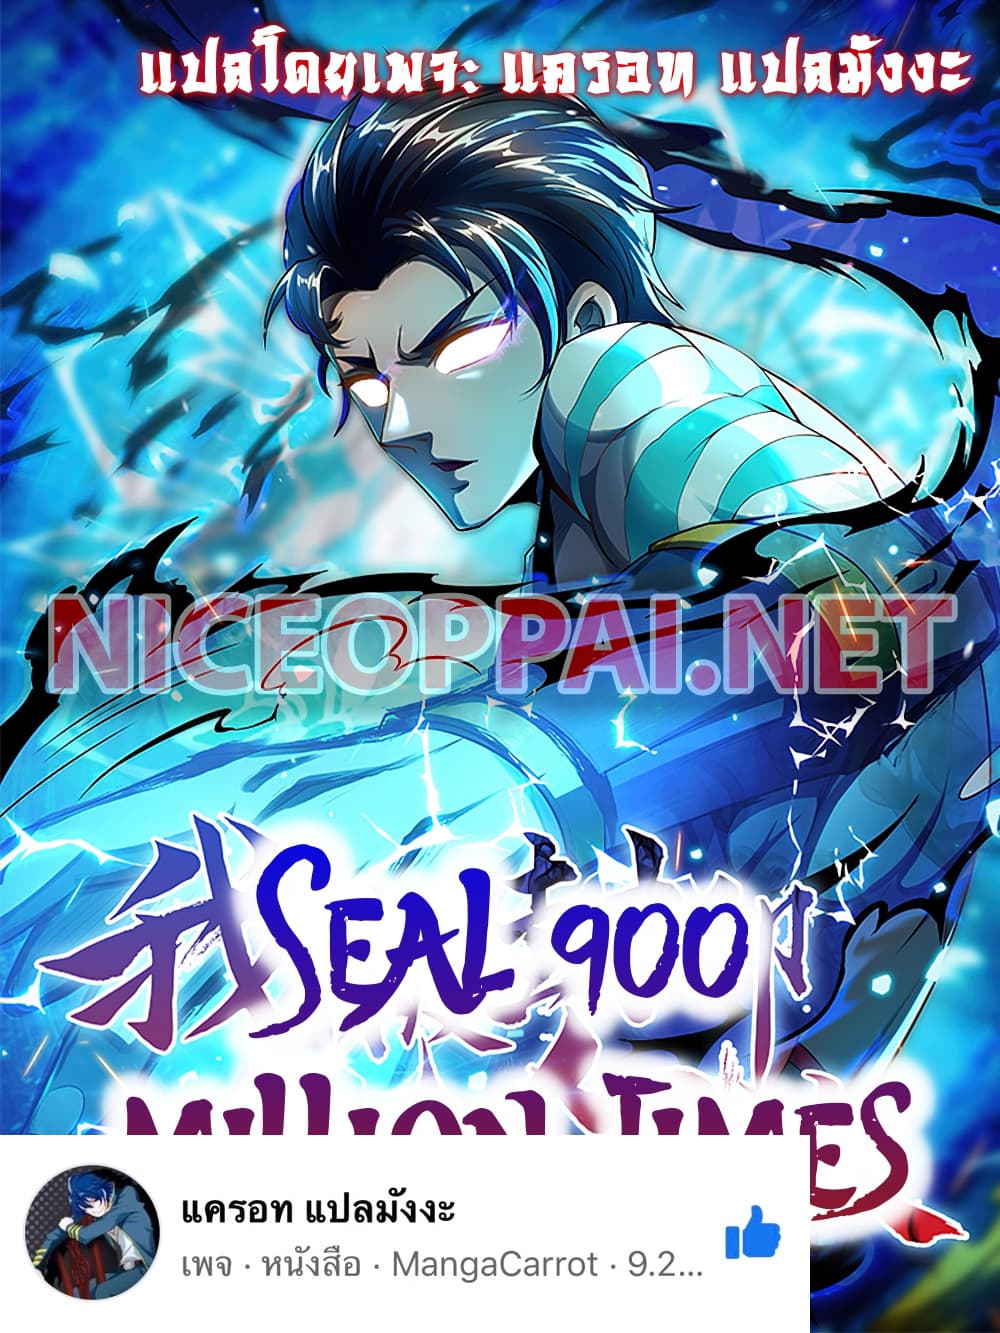 Seal900MillionTimes ตอนที่2 (1)